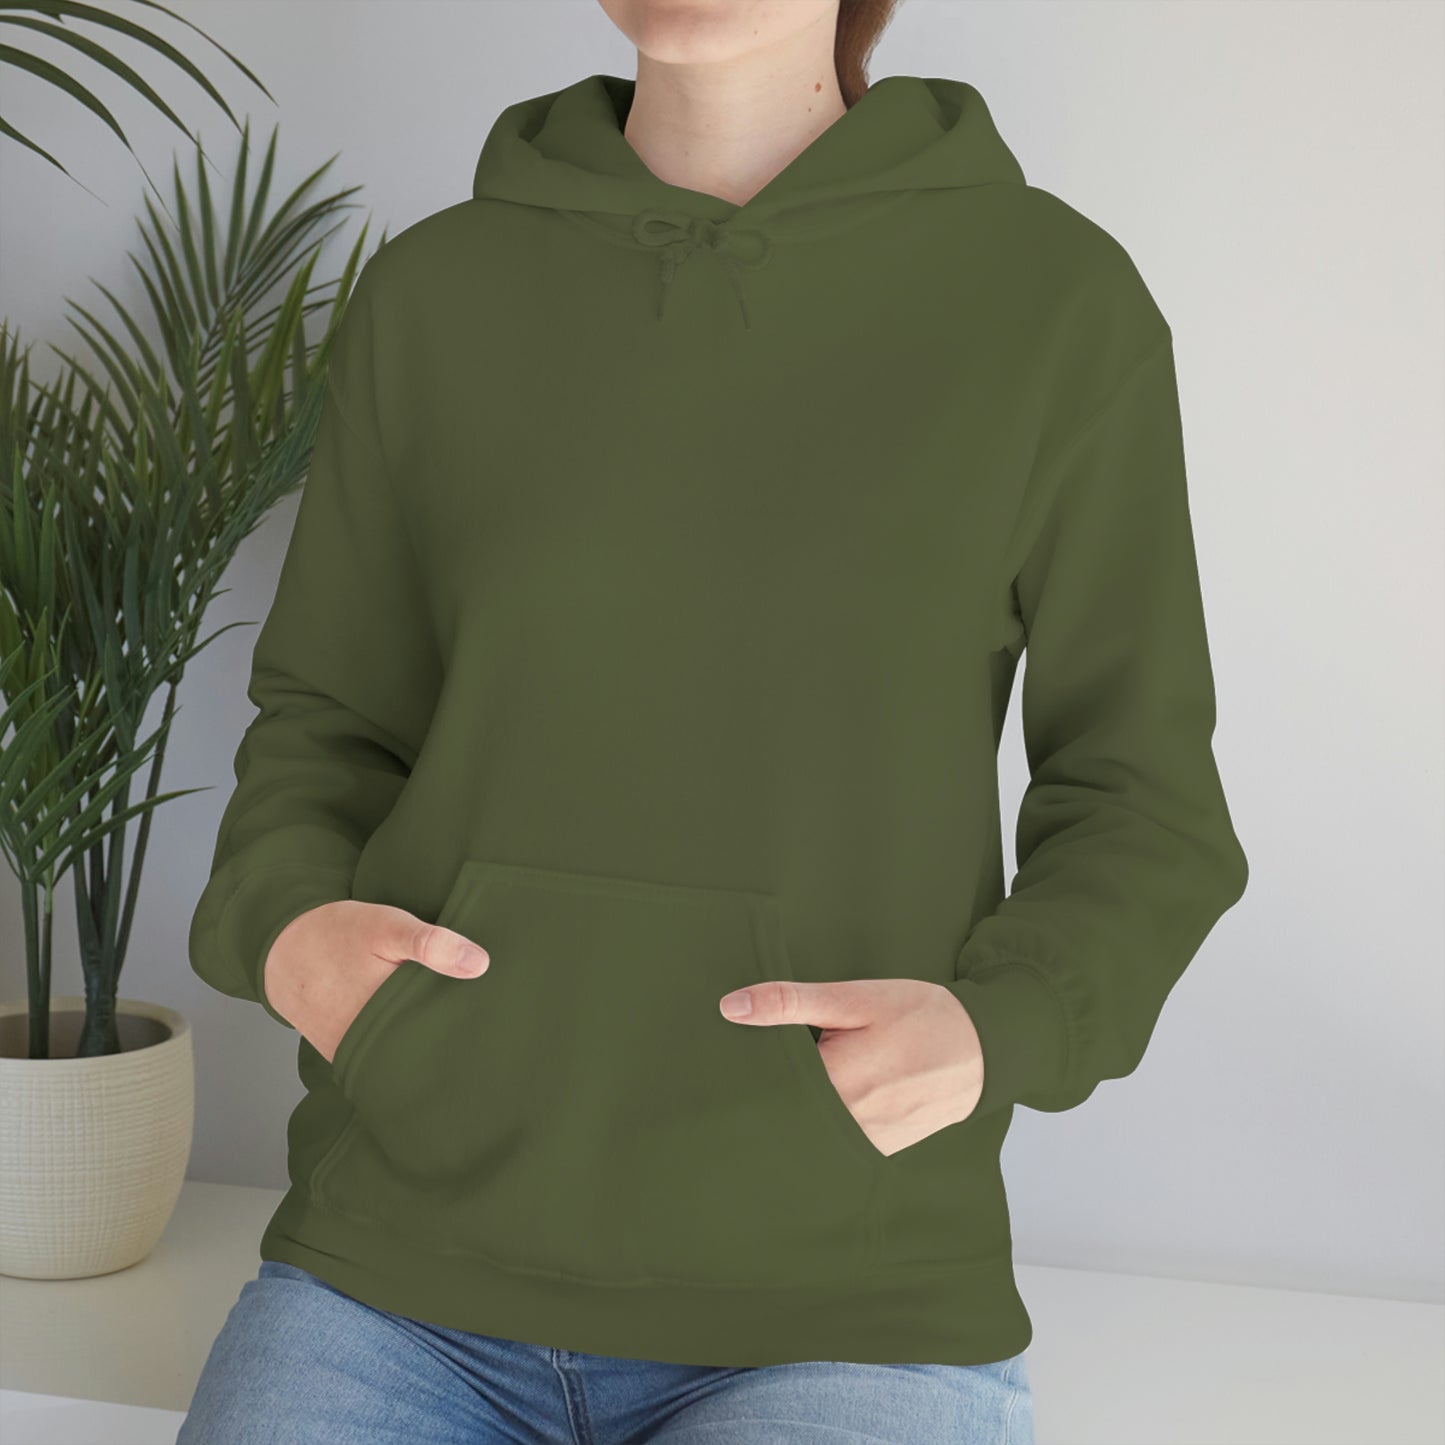 A Healthy Addiction Unisex Sweatshirt